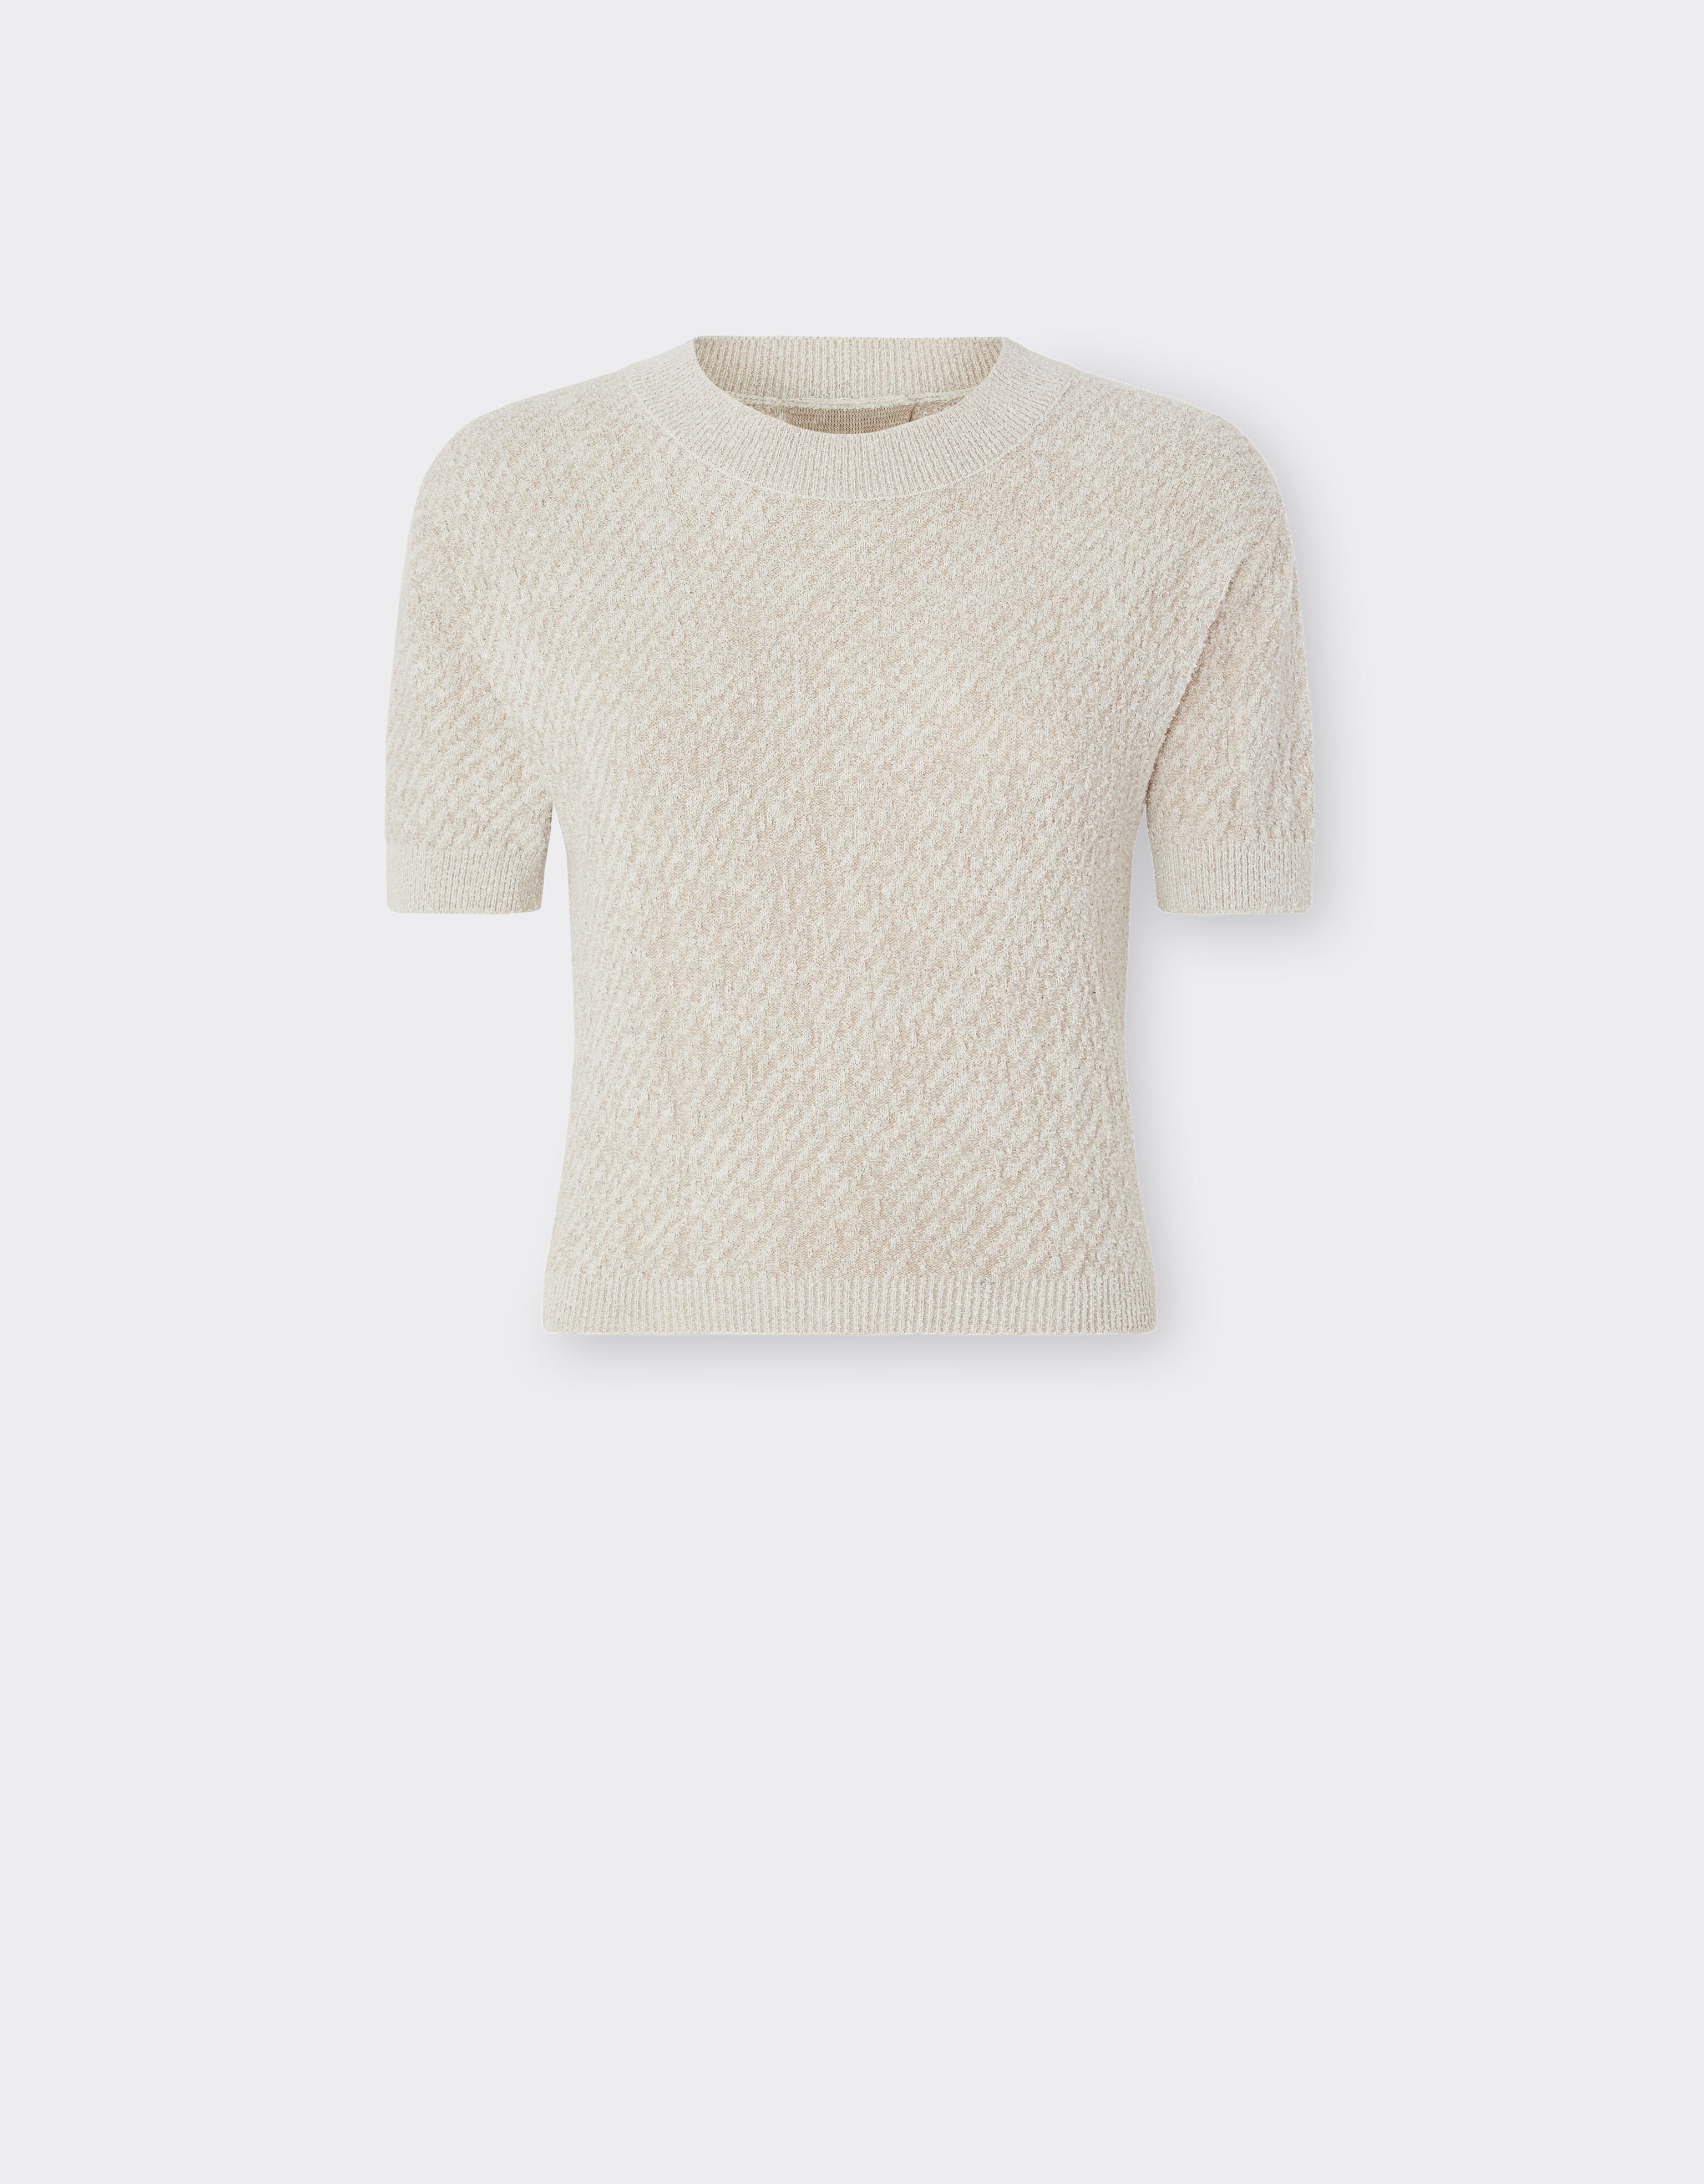 Ferrari T-shirt in lightweight knit Ivory 21069f